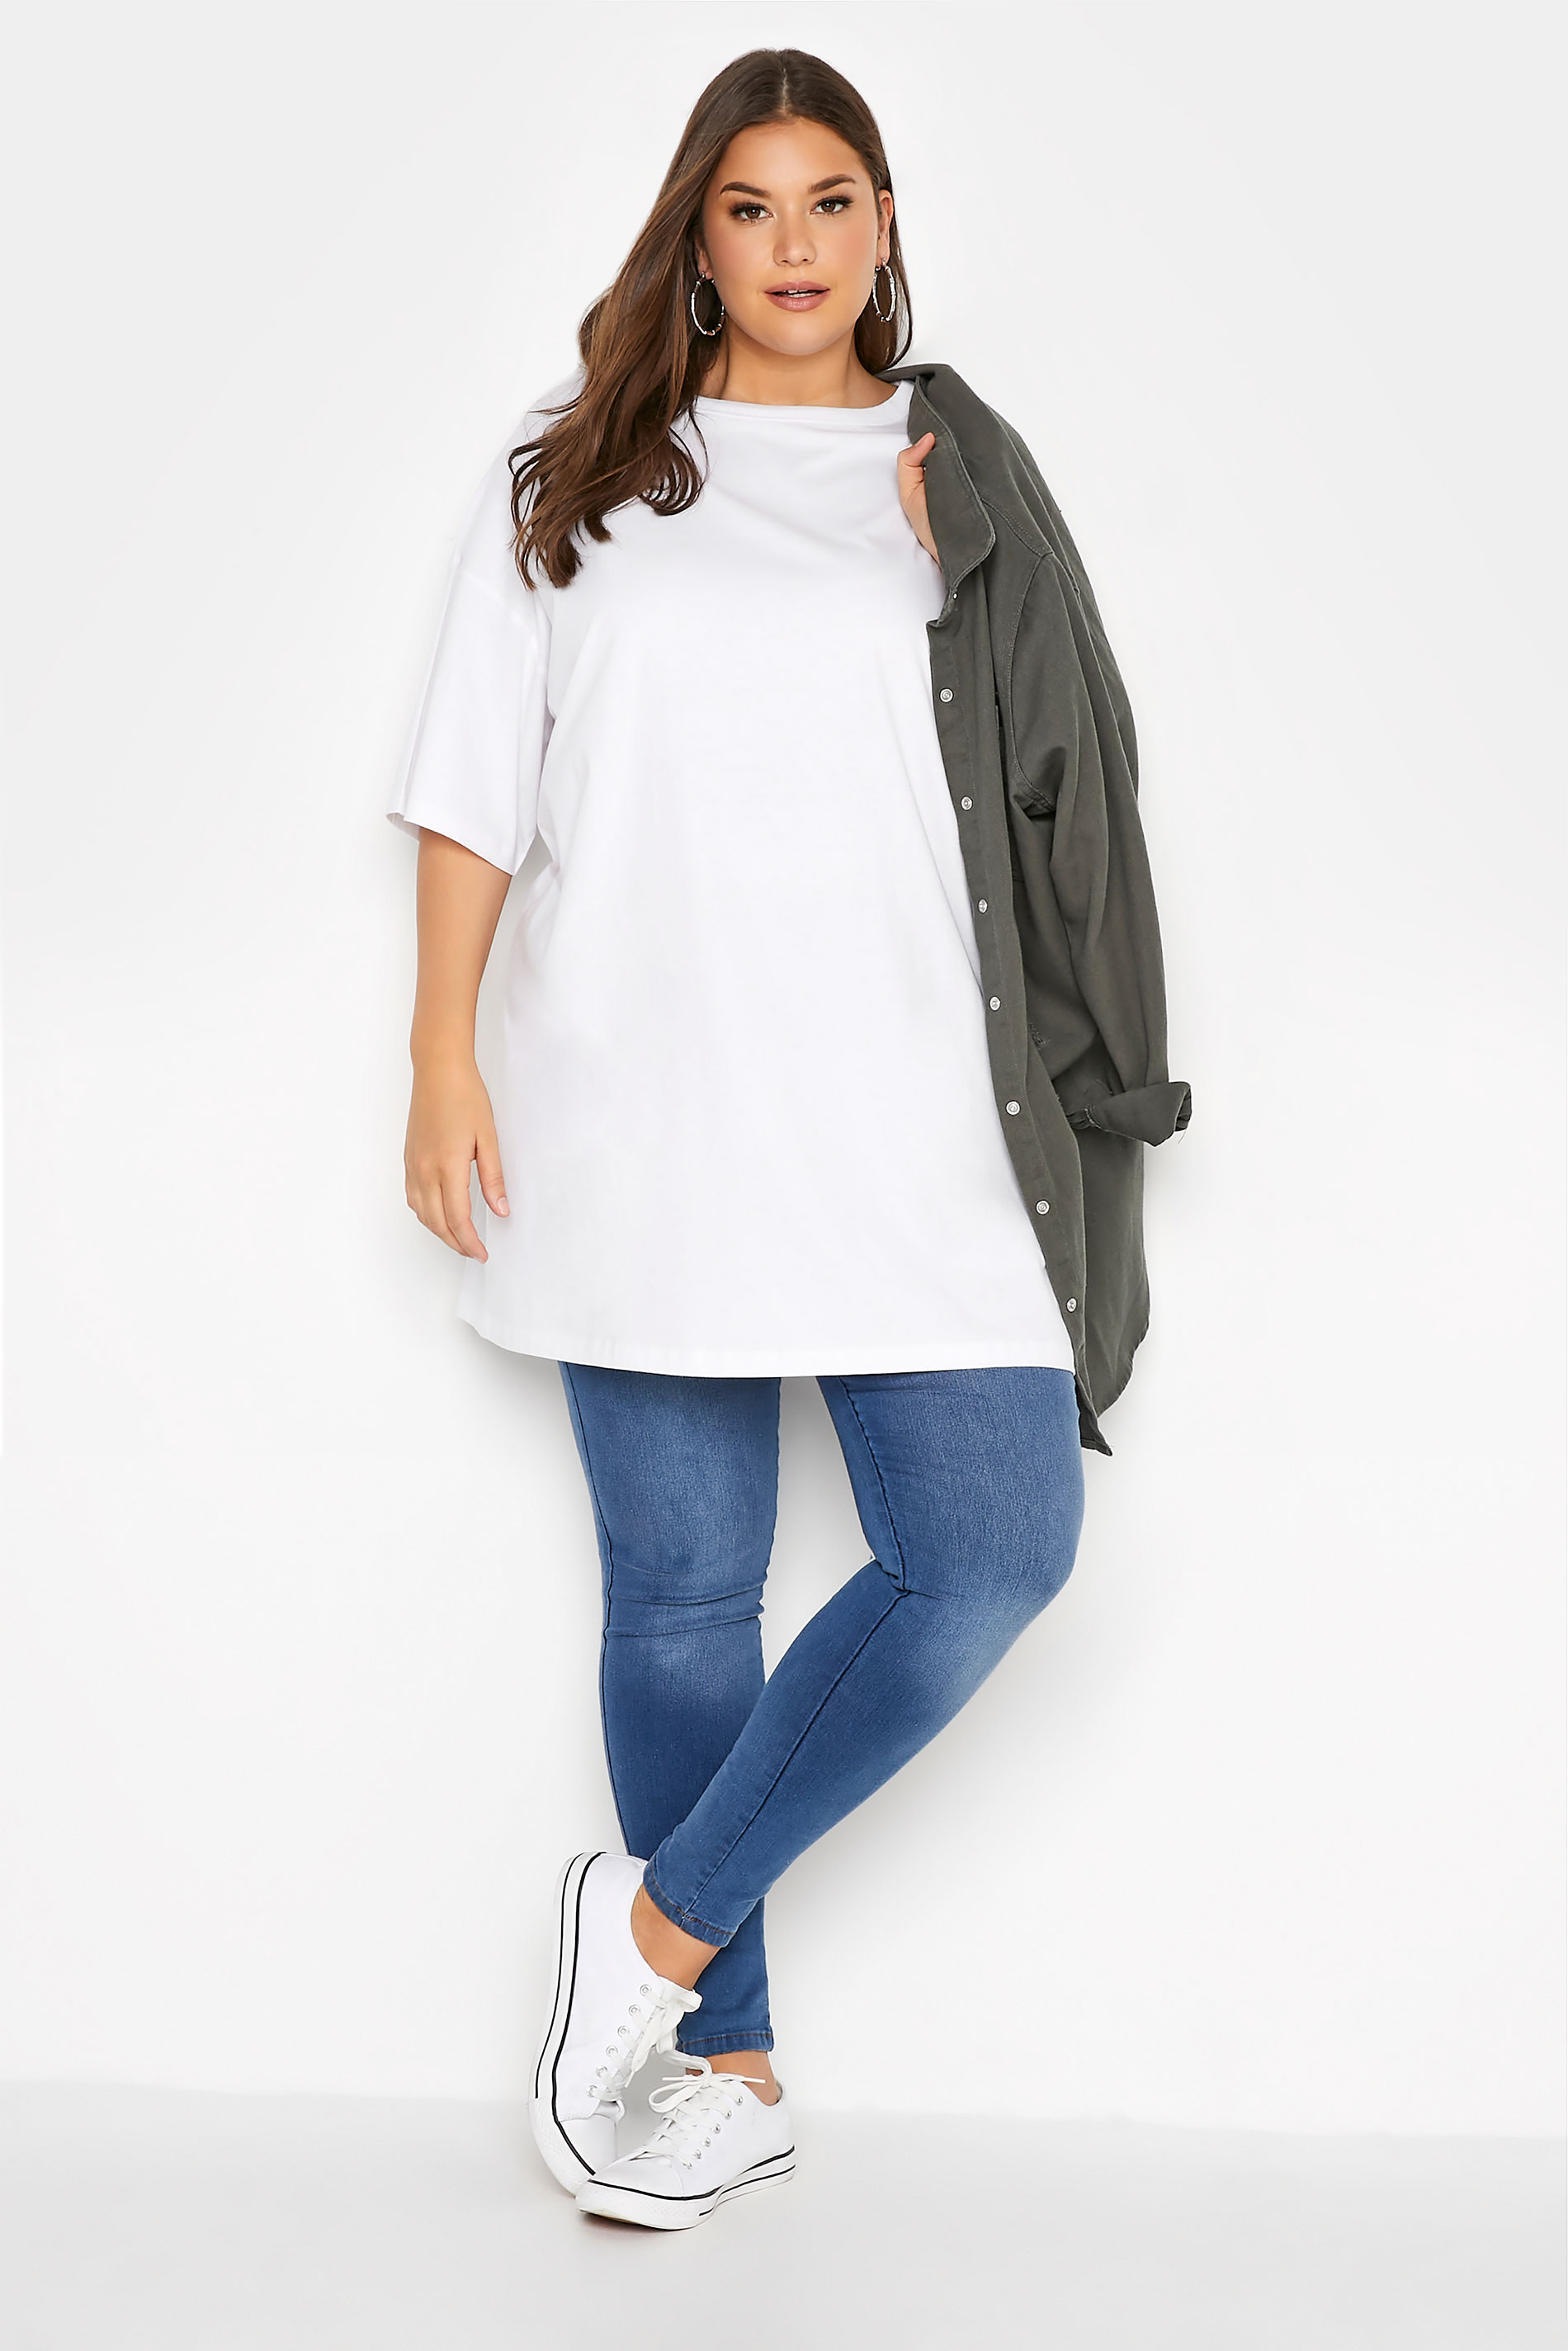 Grande taille  Tops Grande taille  T-Shirts | T-Shirt Blanc en Jersey Design Oversize - TS27743